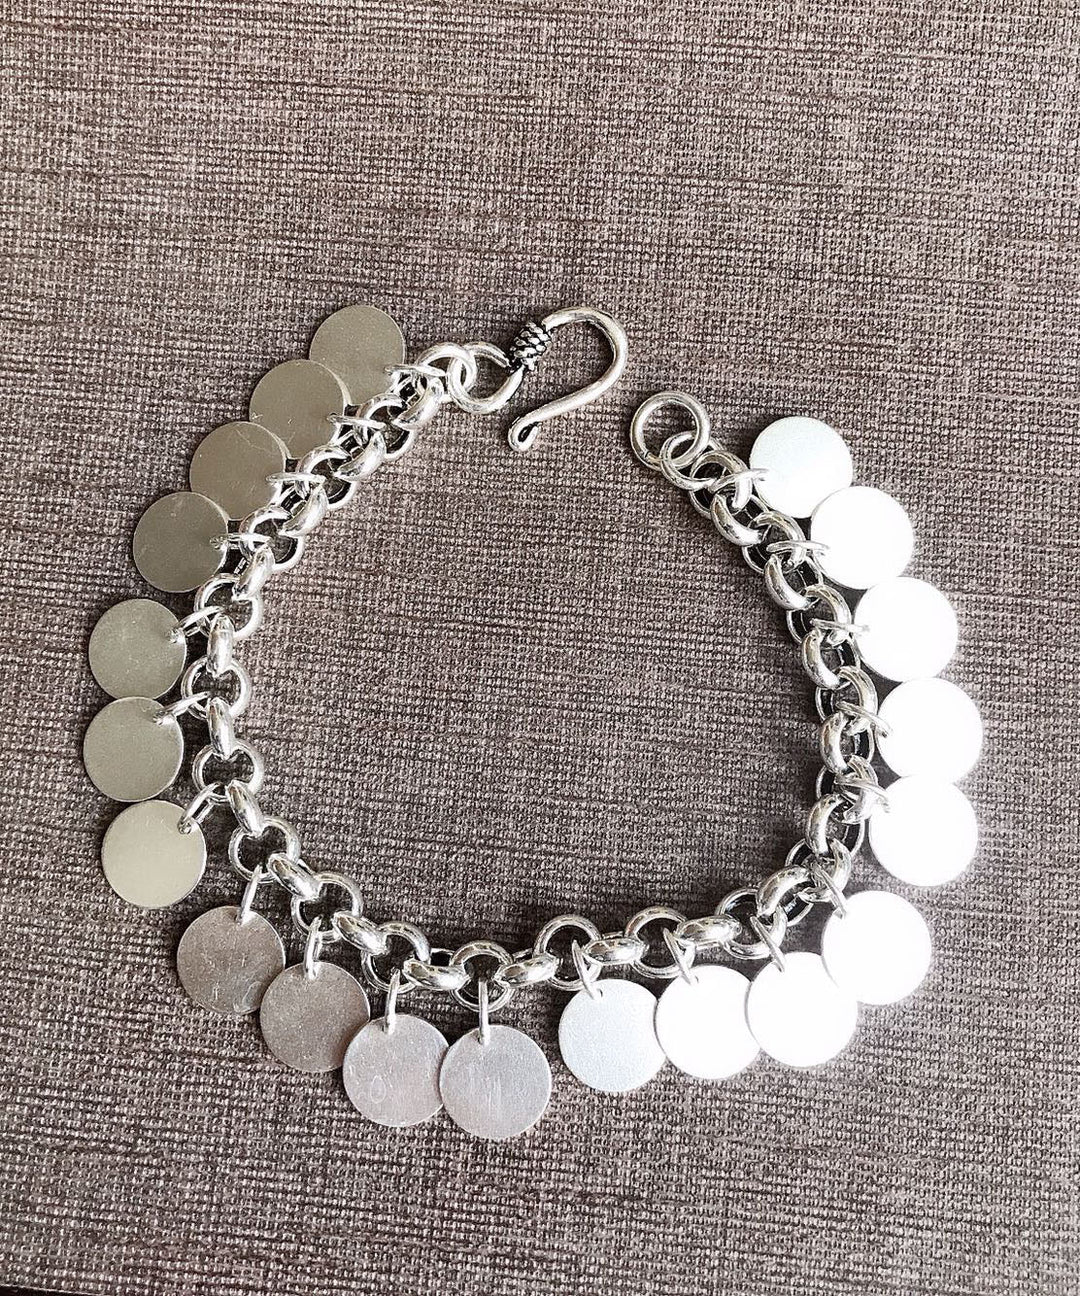 Women Silk Sterling Silver Sequins Tassel Chain Bracelet